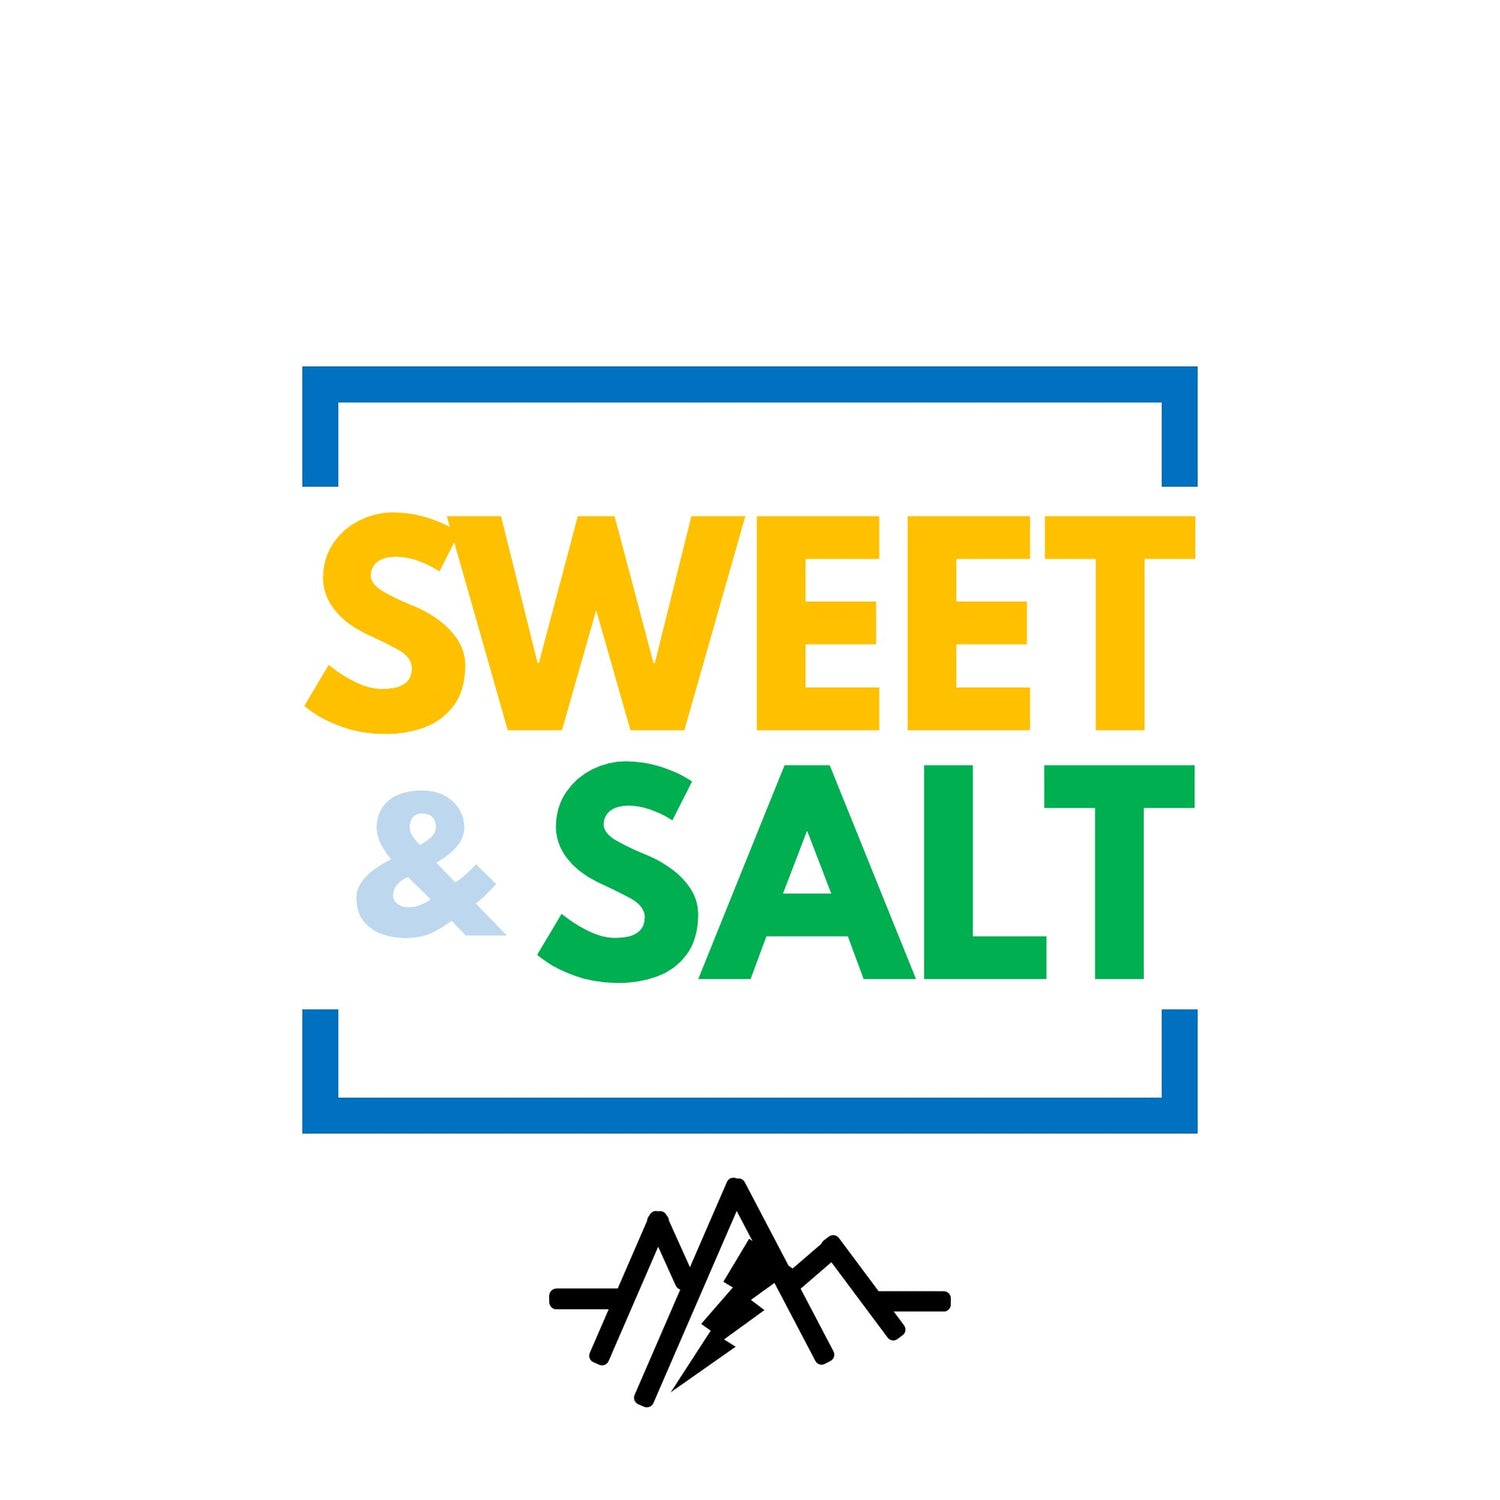 Sweet & Salt